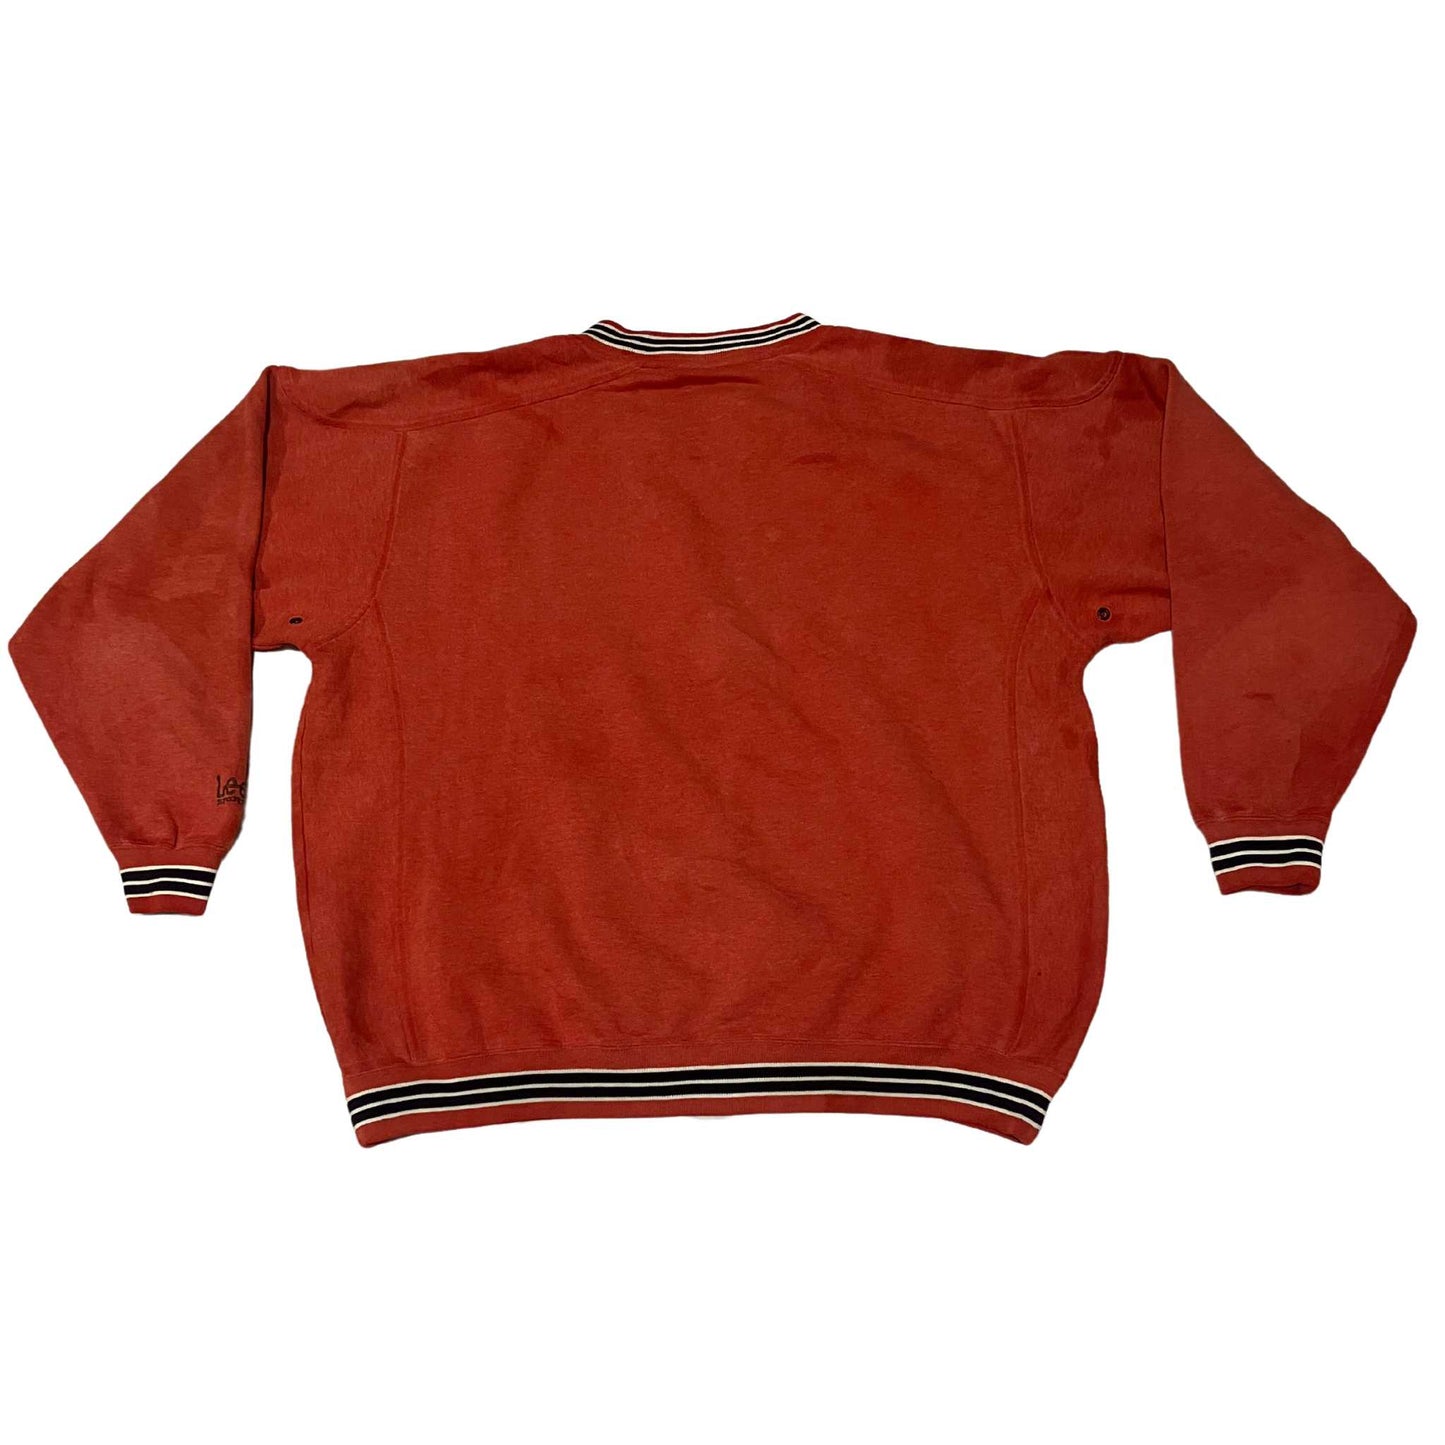 Nebraska Huskers: American College Sweatshirt | Size XL